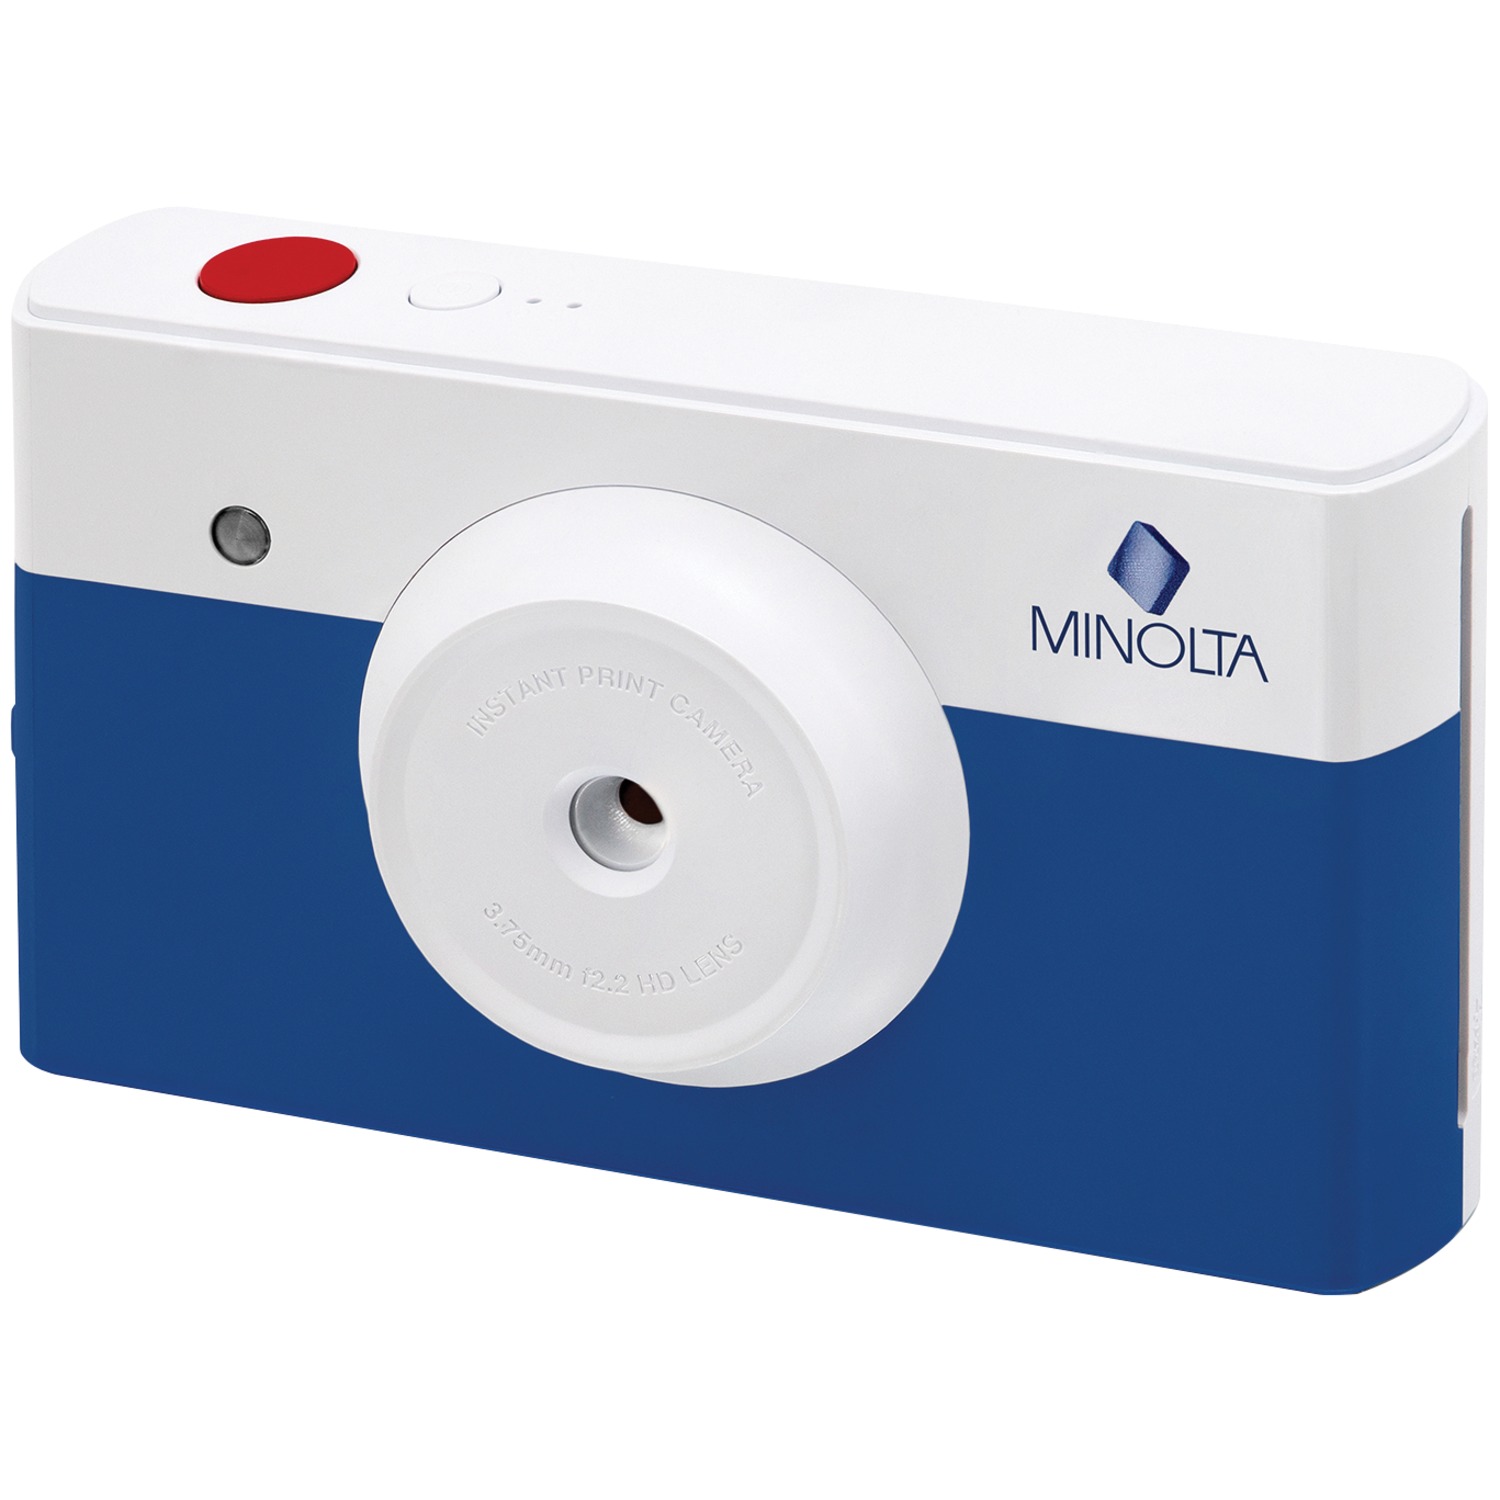 Minolta MNCP10-BL instapix Instant-Print Digital Camera (Blue) - image 5 of 12